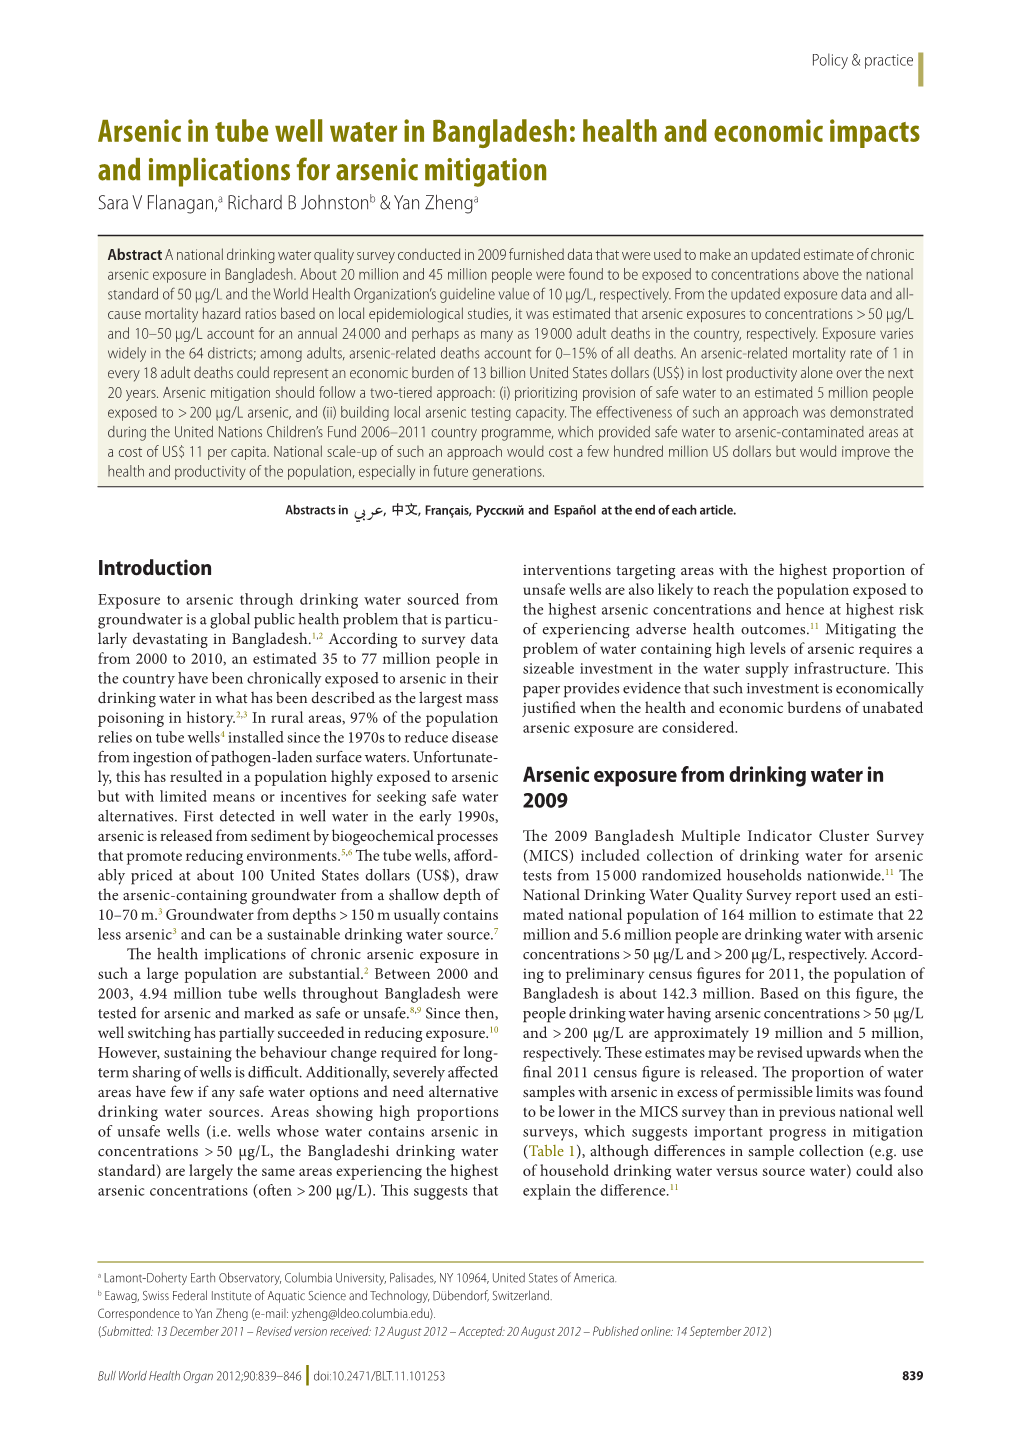 Arsenic in Tube Well Water in Bangladesh: Health and Economic Impacts and Implications for Arsenic Mitigation Sara V Flanagan,A Richard B Johnstonb & Yan Zhenga